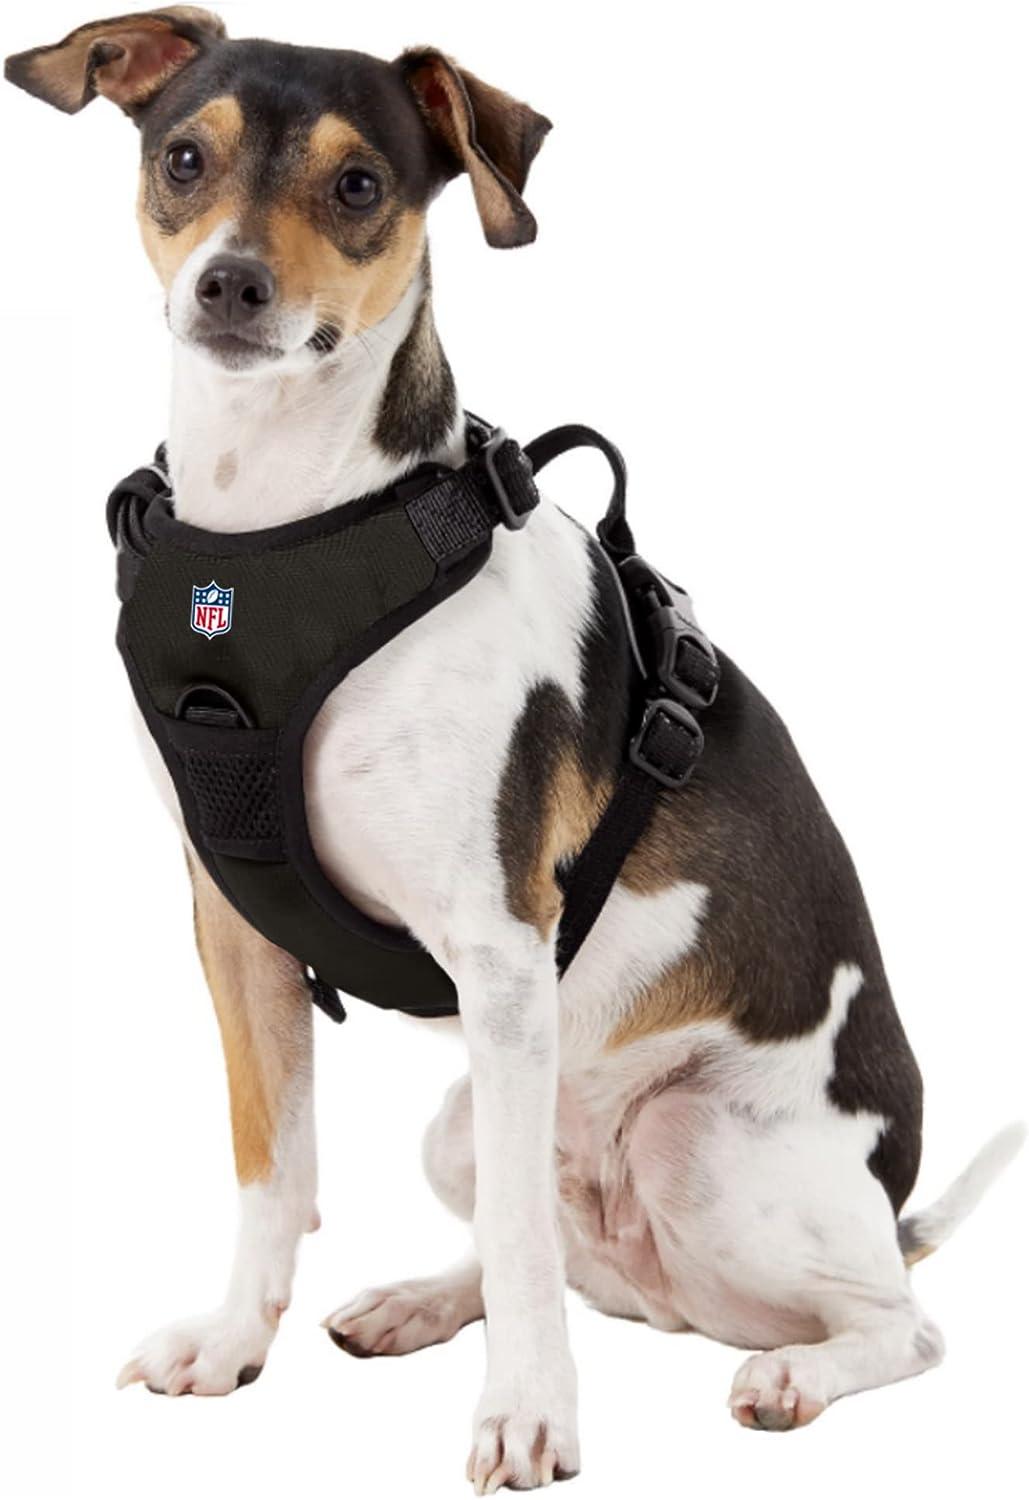  NFL Philadelphia Eagles Dog Jersey, Size: XX-Large